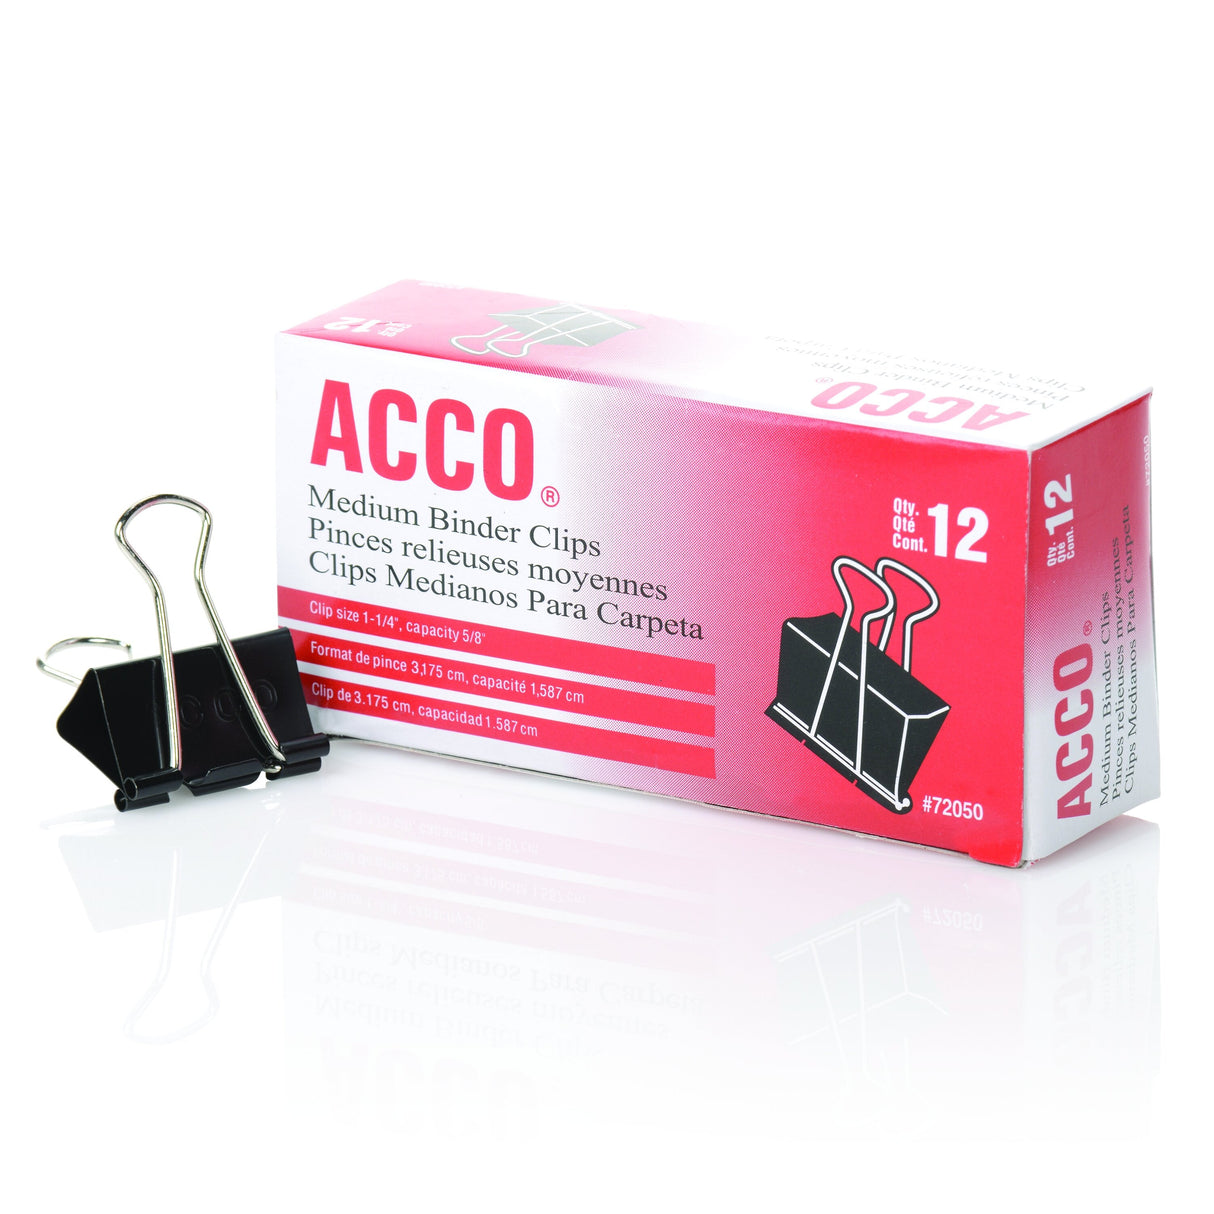 ACCO Binder Clips - Medium - 12 Pack